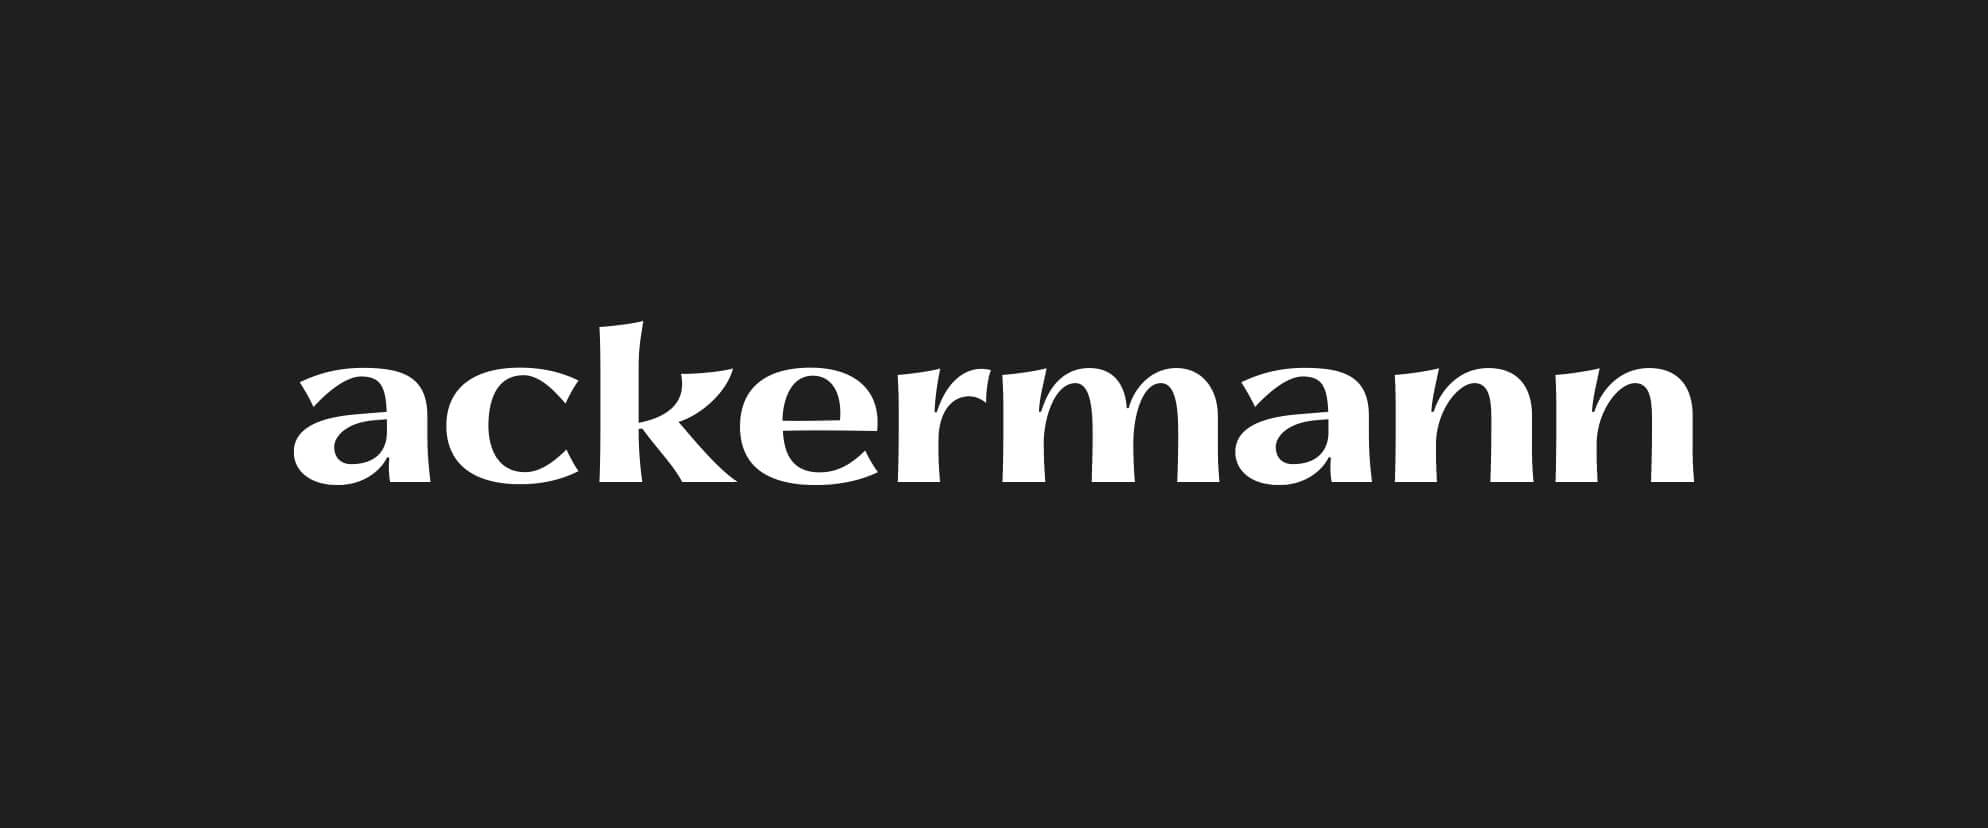 Ackermann Branding - By Superhuit